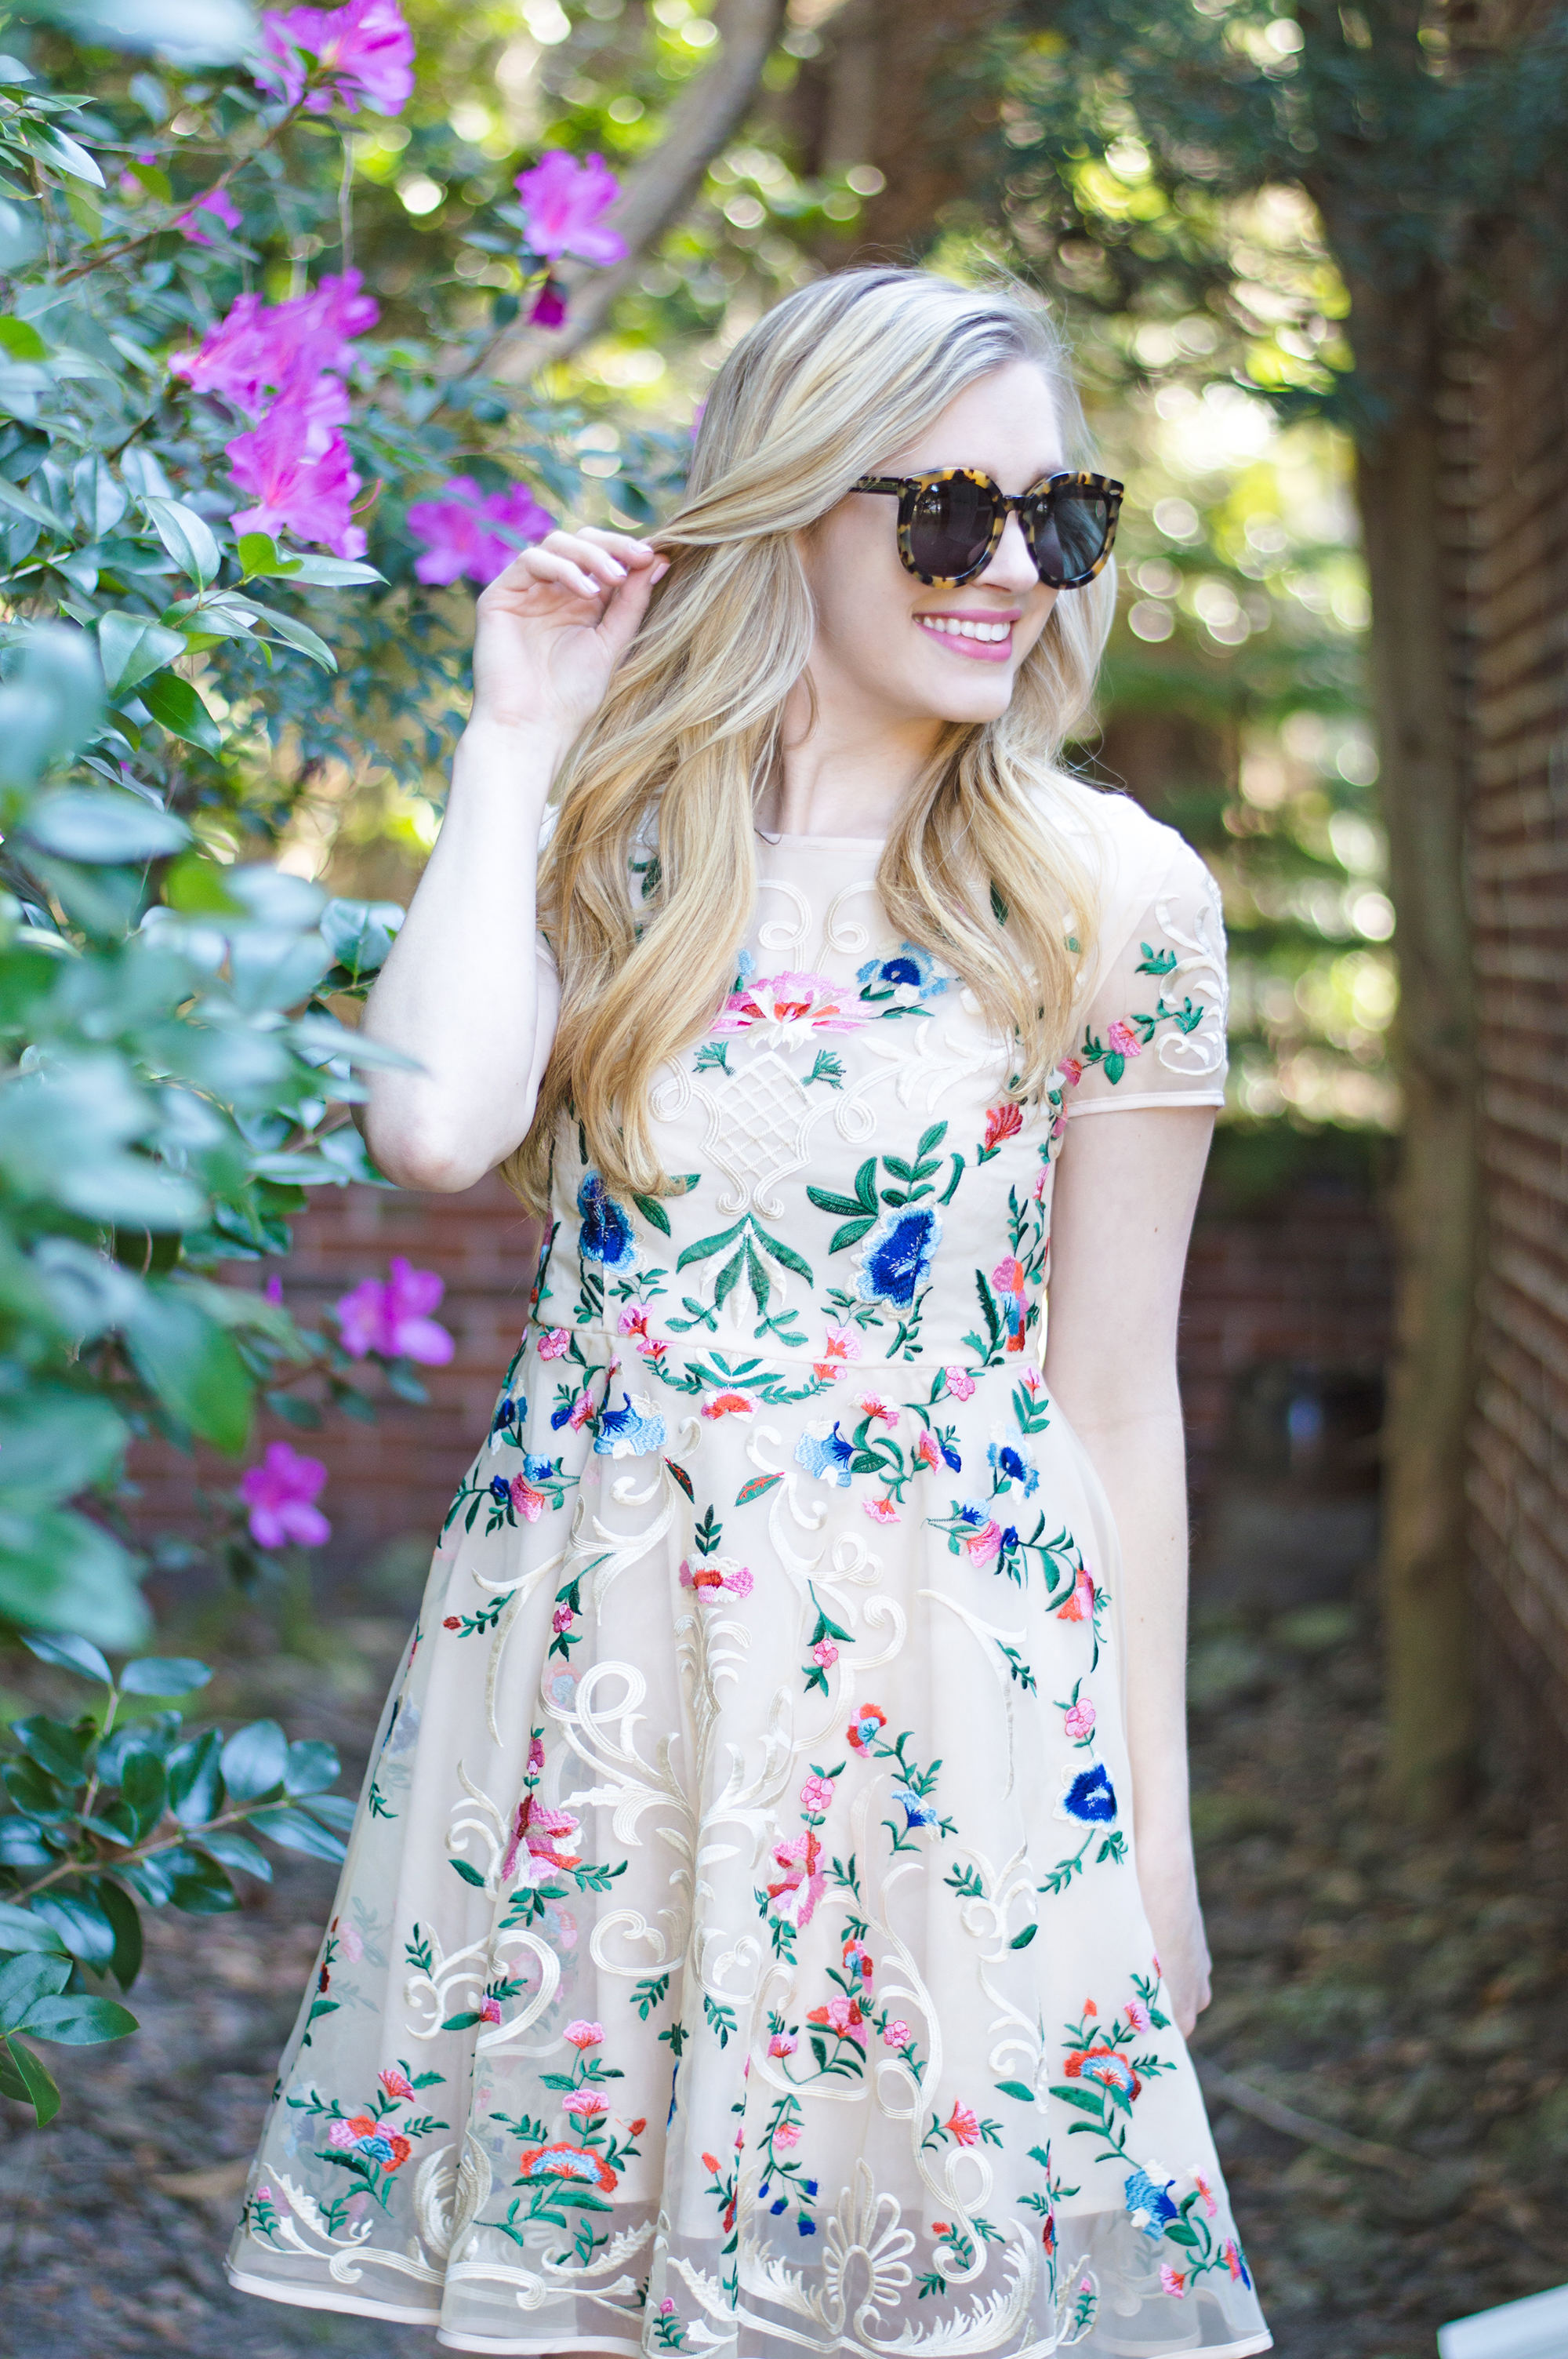 styelled-blog-elle-elisabeth-fashion-style-blogger-fblogger-spring-dress-embroidered-wedding-chicwish-floral-feminine-flirty-karen-walker-04